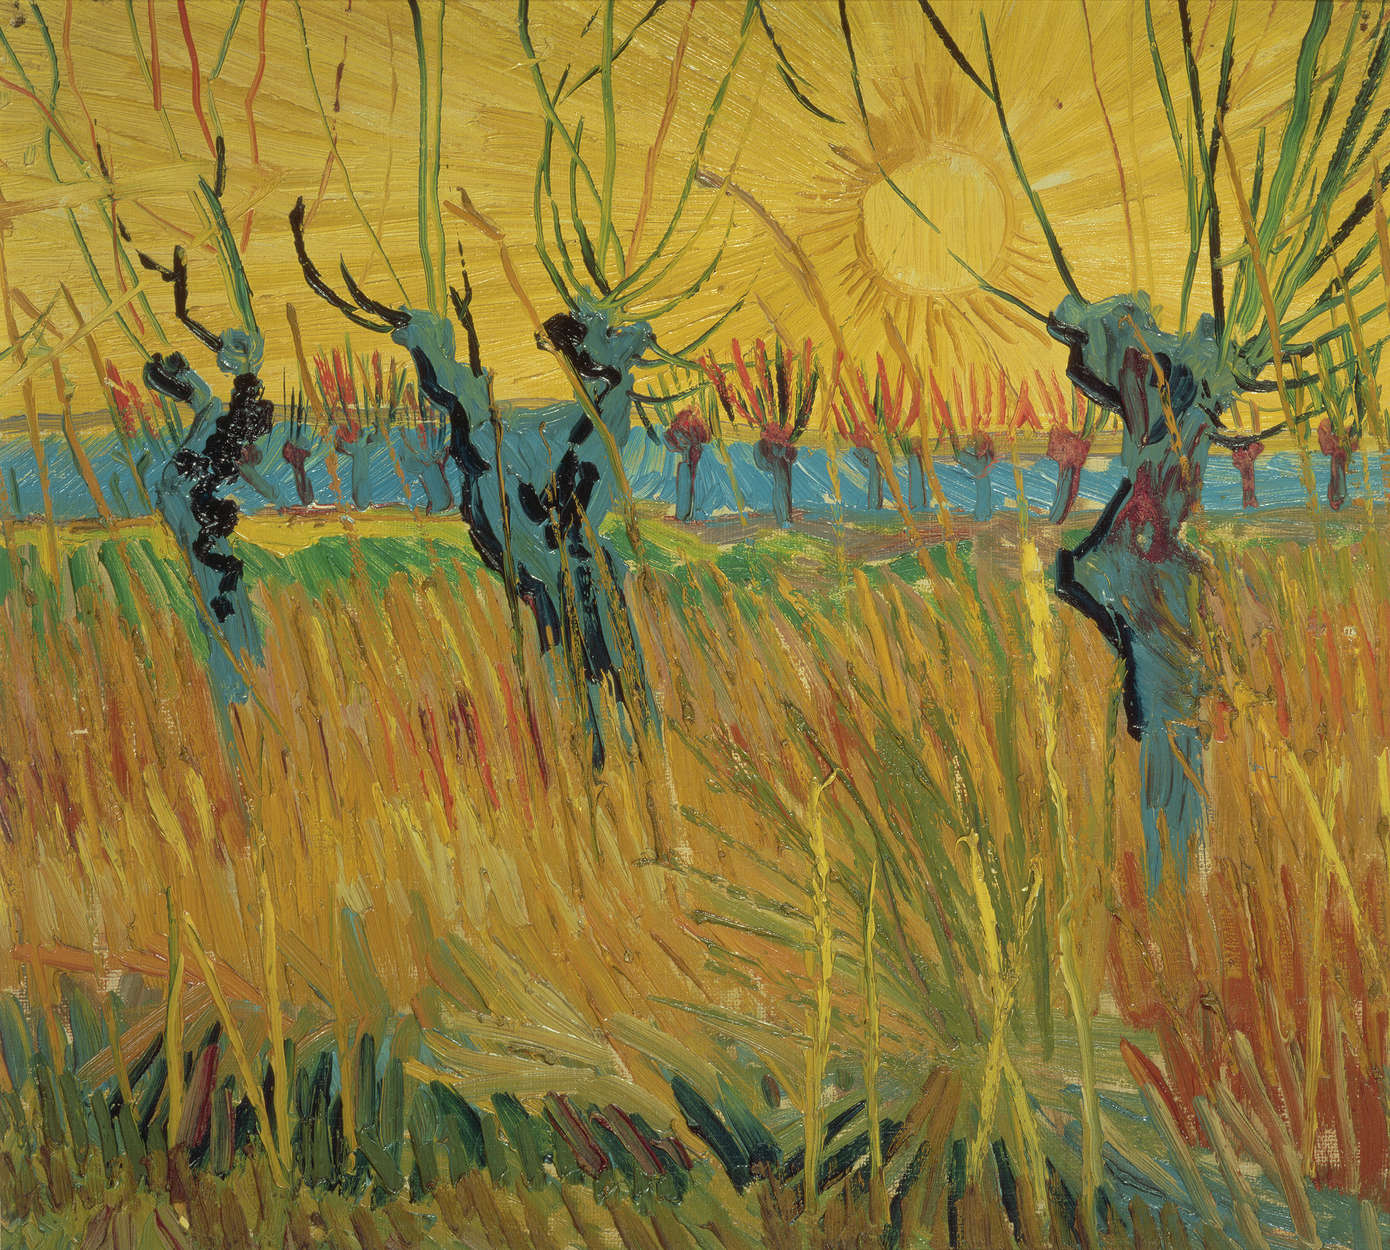             Mural de Vincent van Gogh "Sauces al atardecer"
        